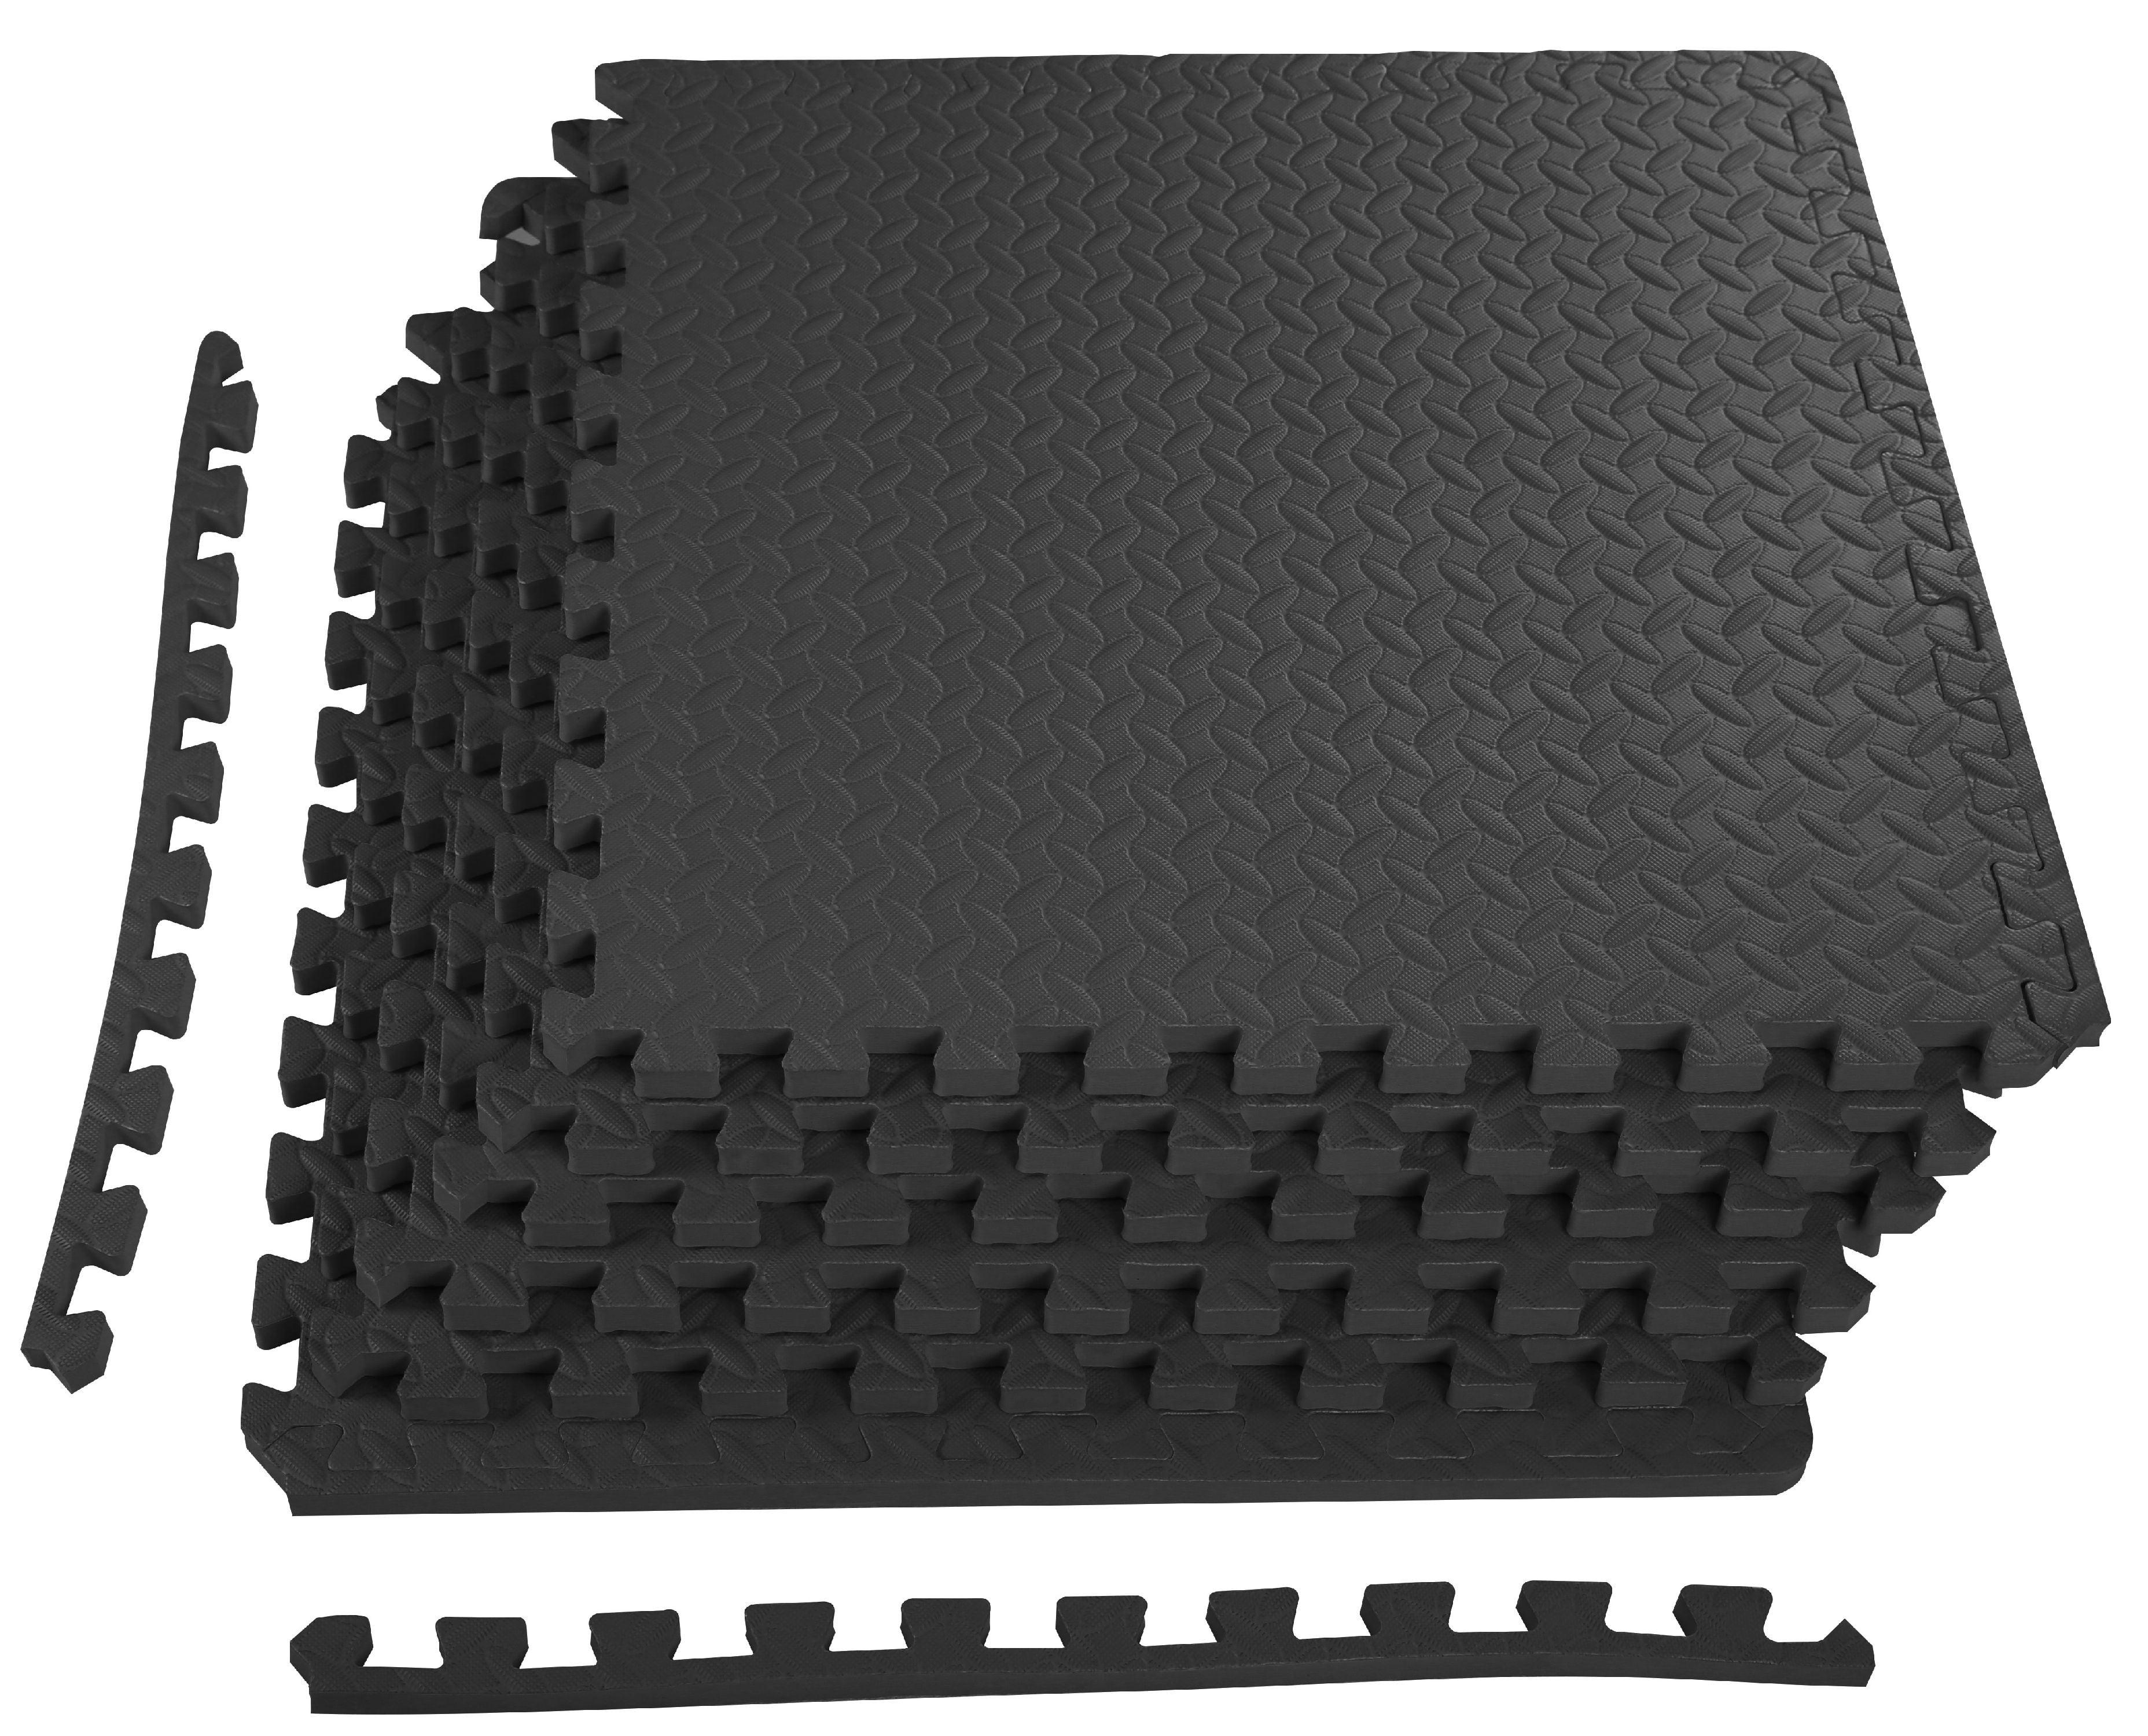 12 Styles EVA Foam Floor Mat Interlocking Exercise Gym Puzzle Tiles with Borders 